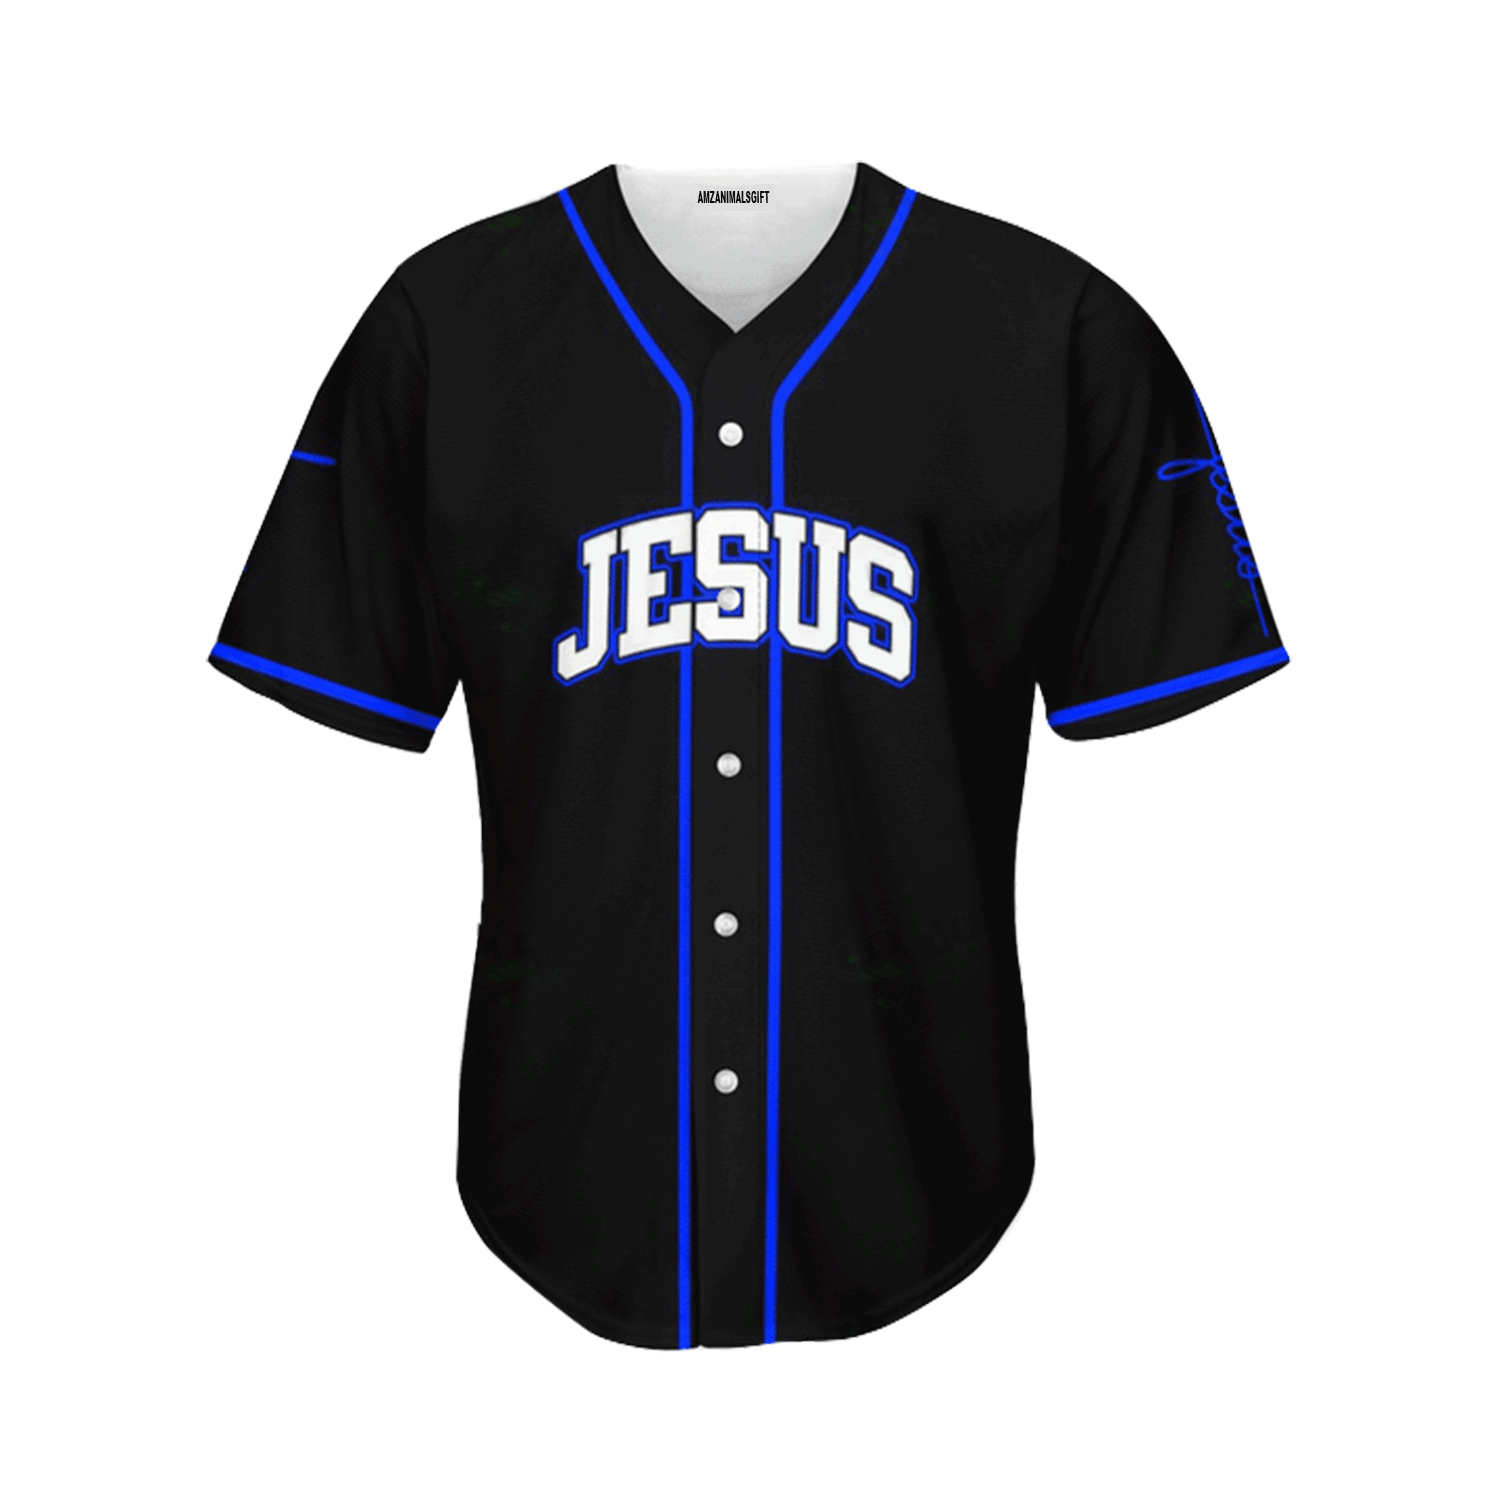 Jesus Baseball Jersey Shirt - Jesus Lion on The Light Baseball Jersey Shirt For Men & Women, Perfect Gift For Christian